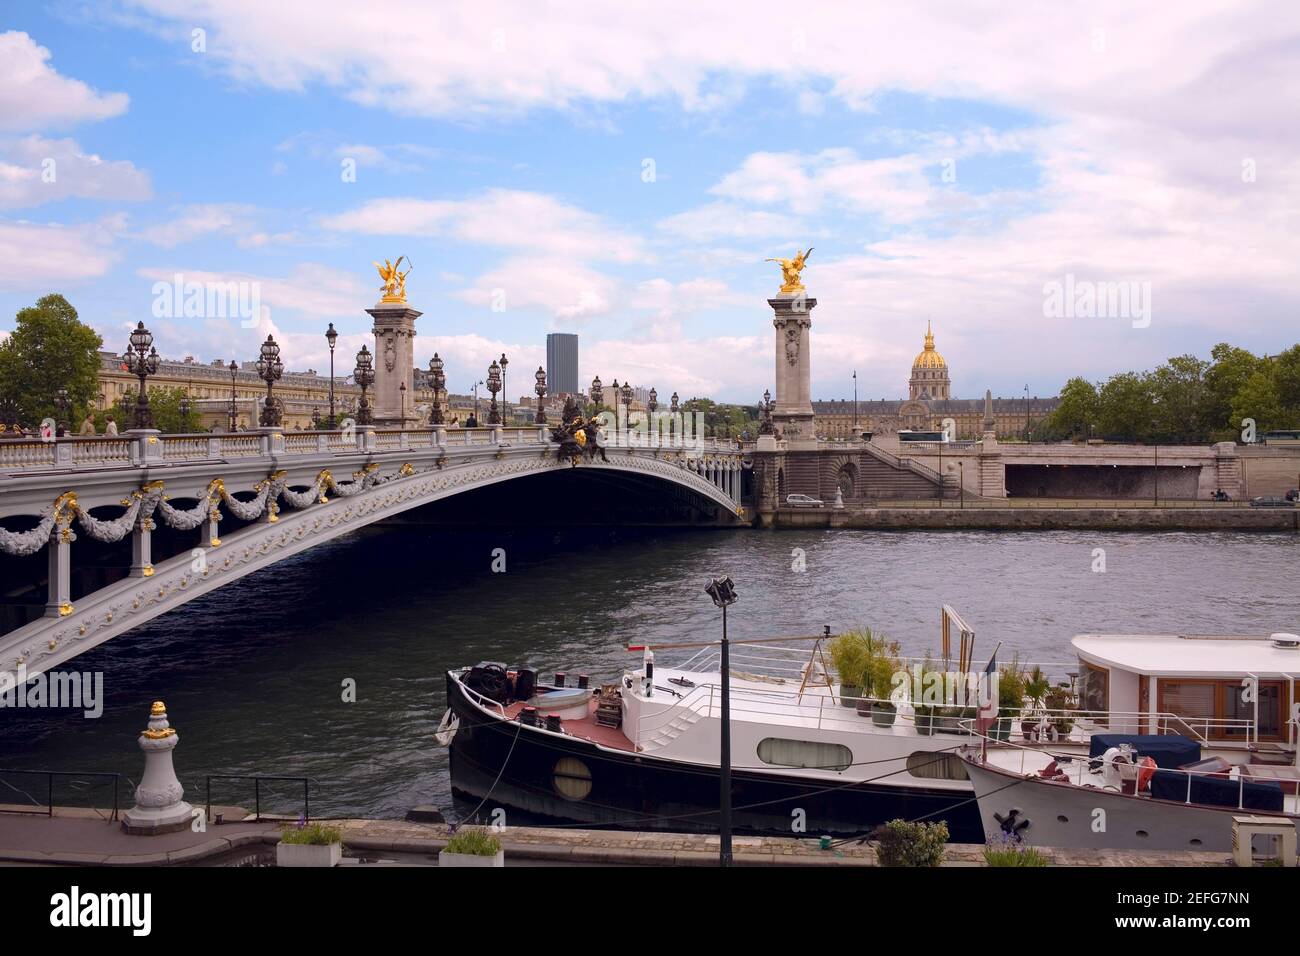 Arch bridge over a river, Ponte Alexander III, Seine River, Paris, France Stock Photo